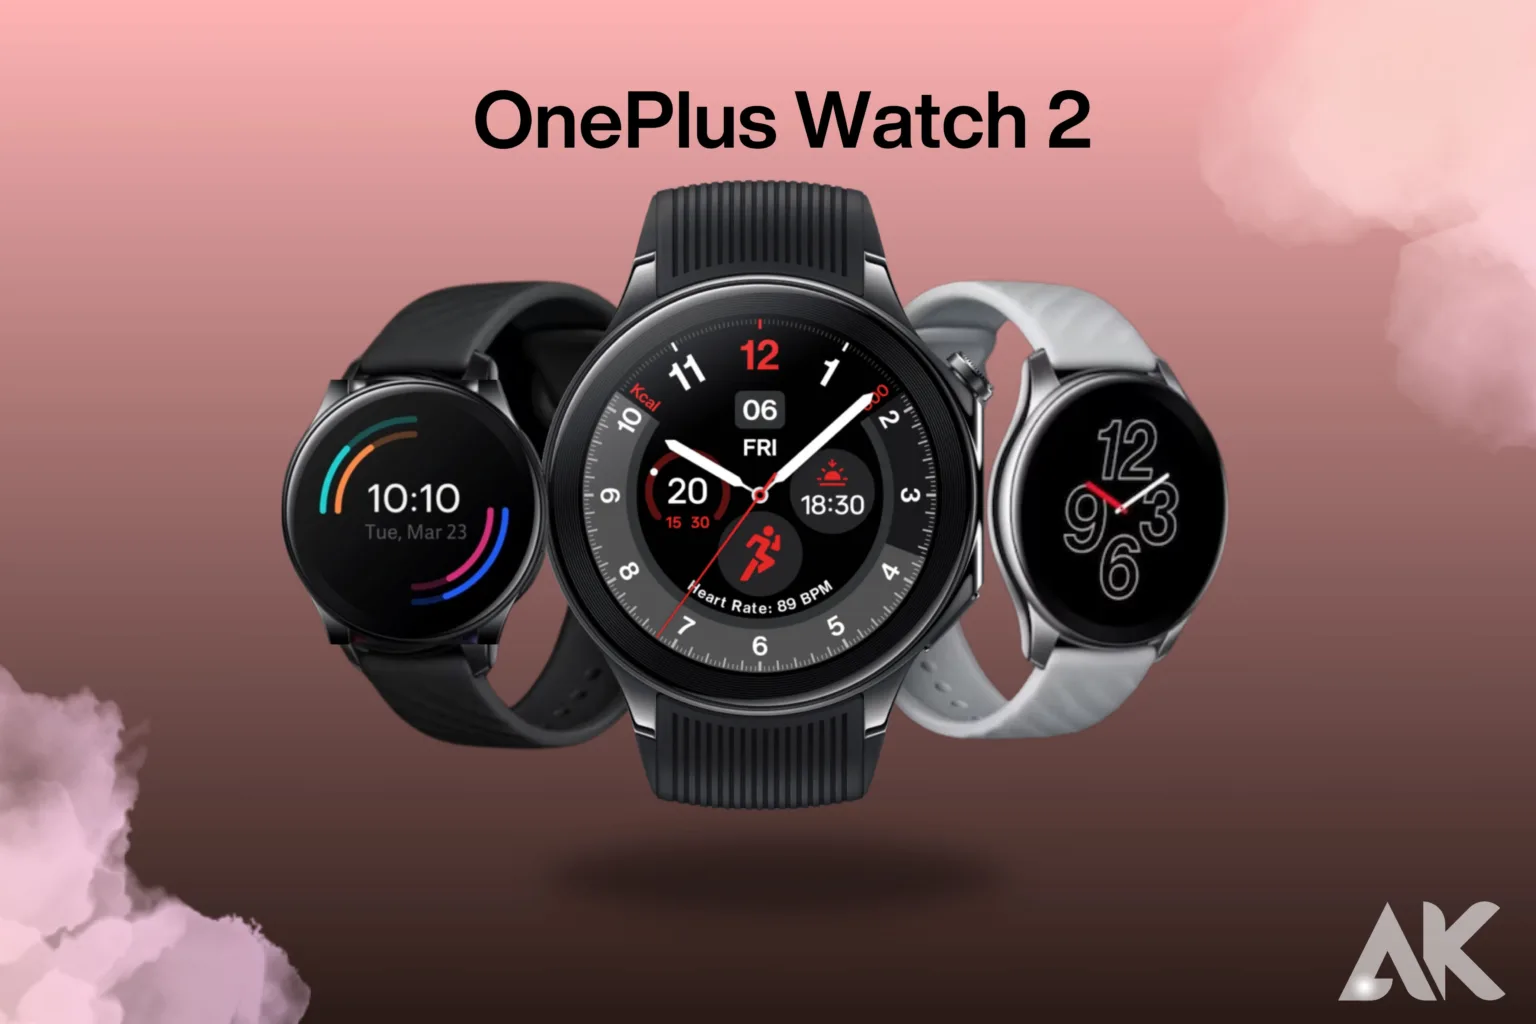 Is OnePlus Watch 2 worth it